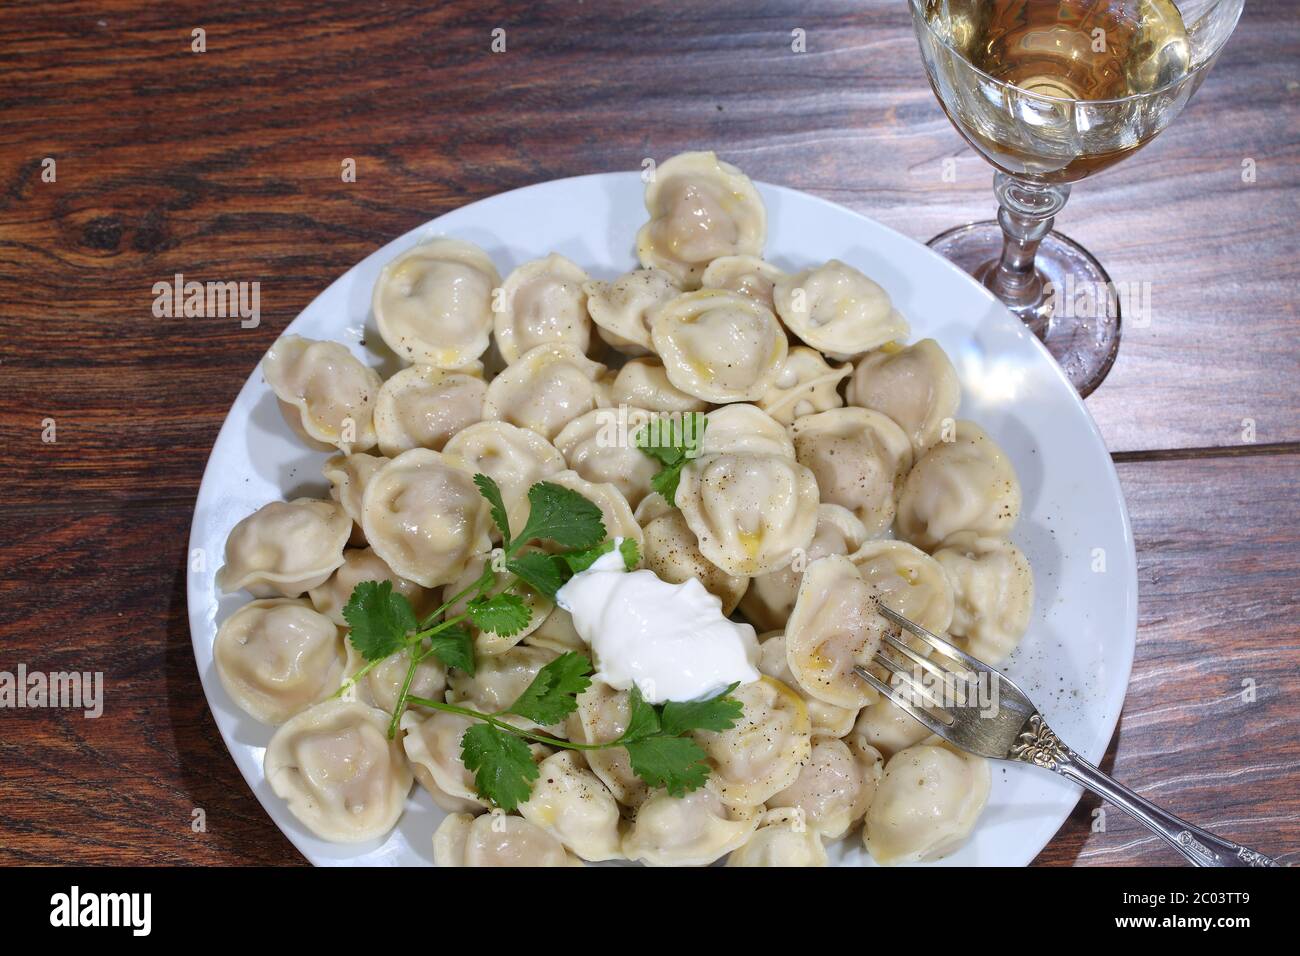 Wine and pelmeni in a plate Stock Photo